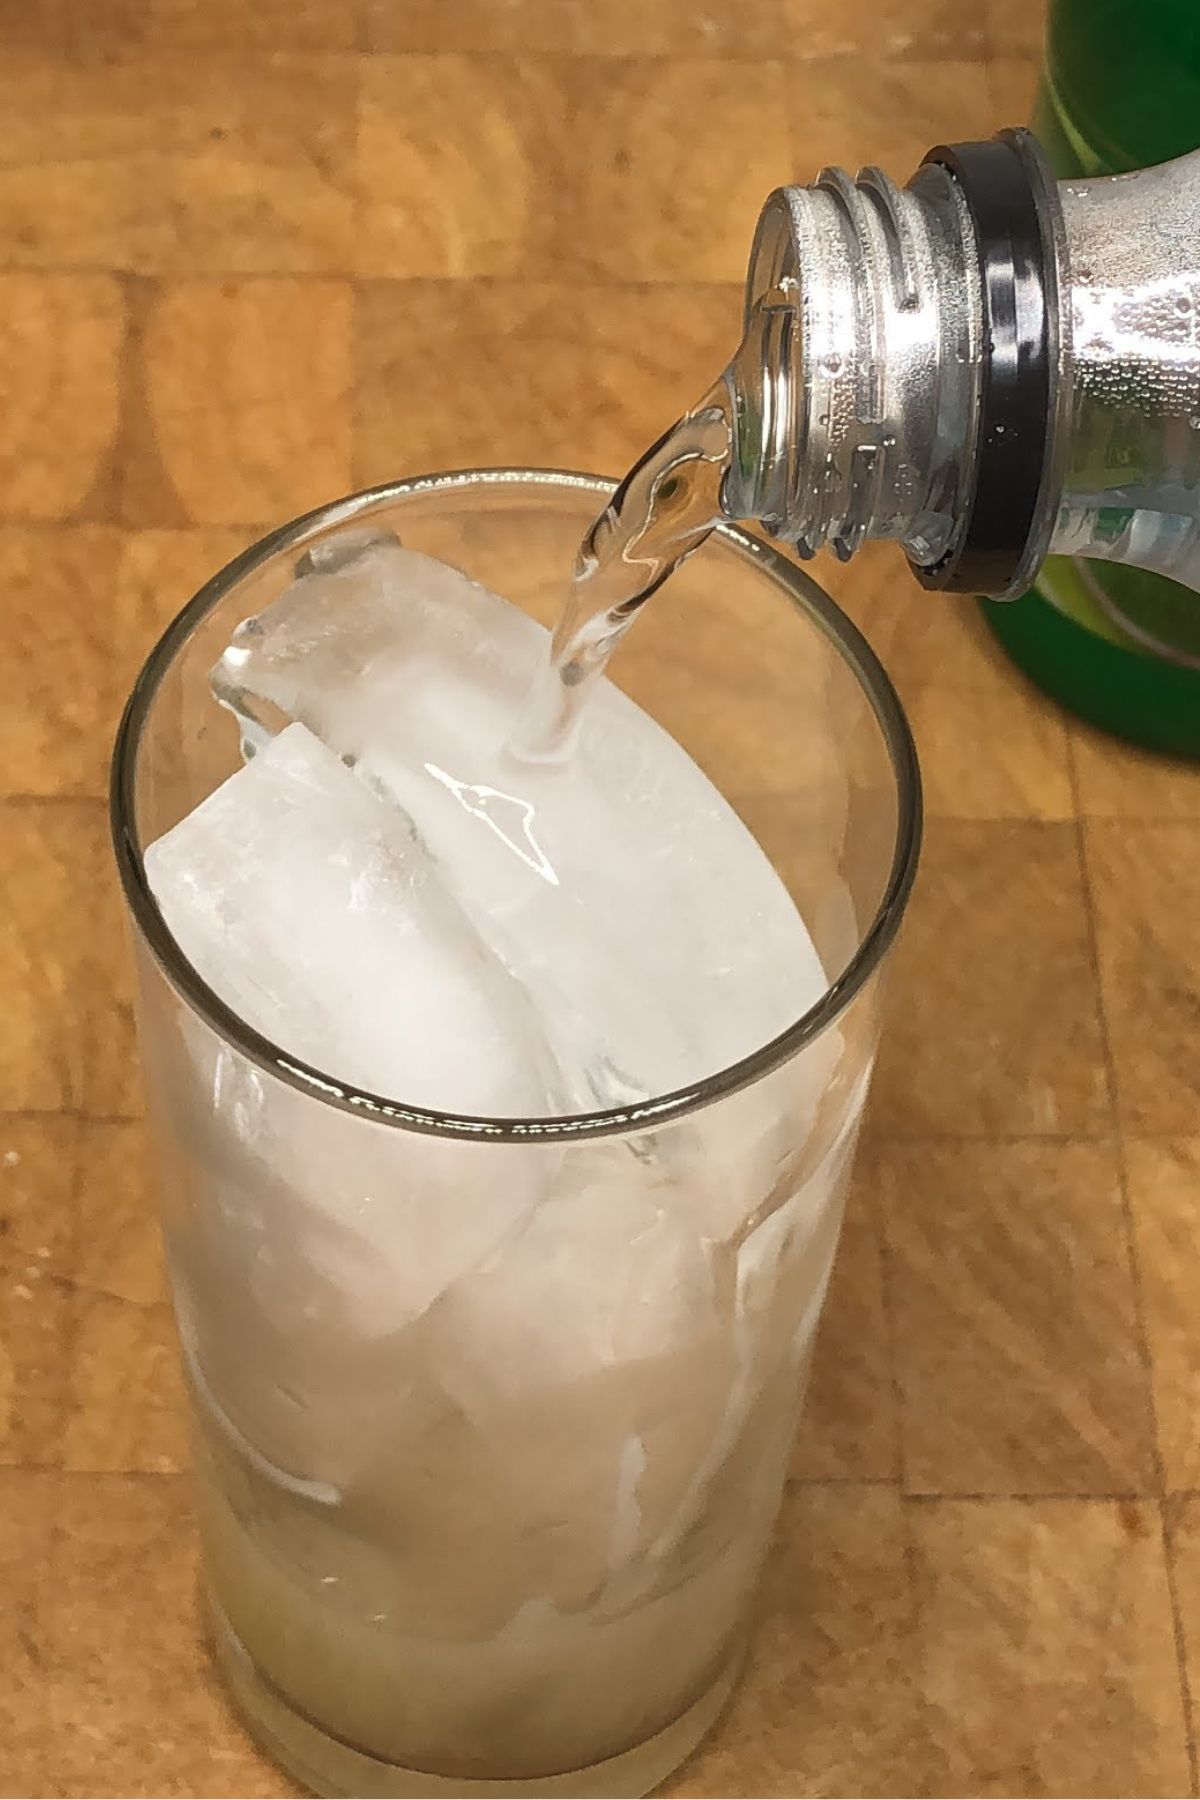 Pouring club soda into a glass.